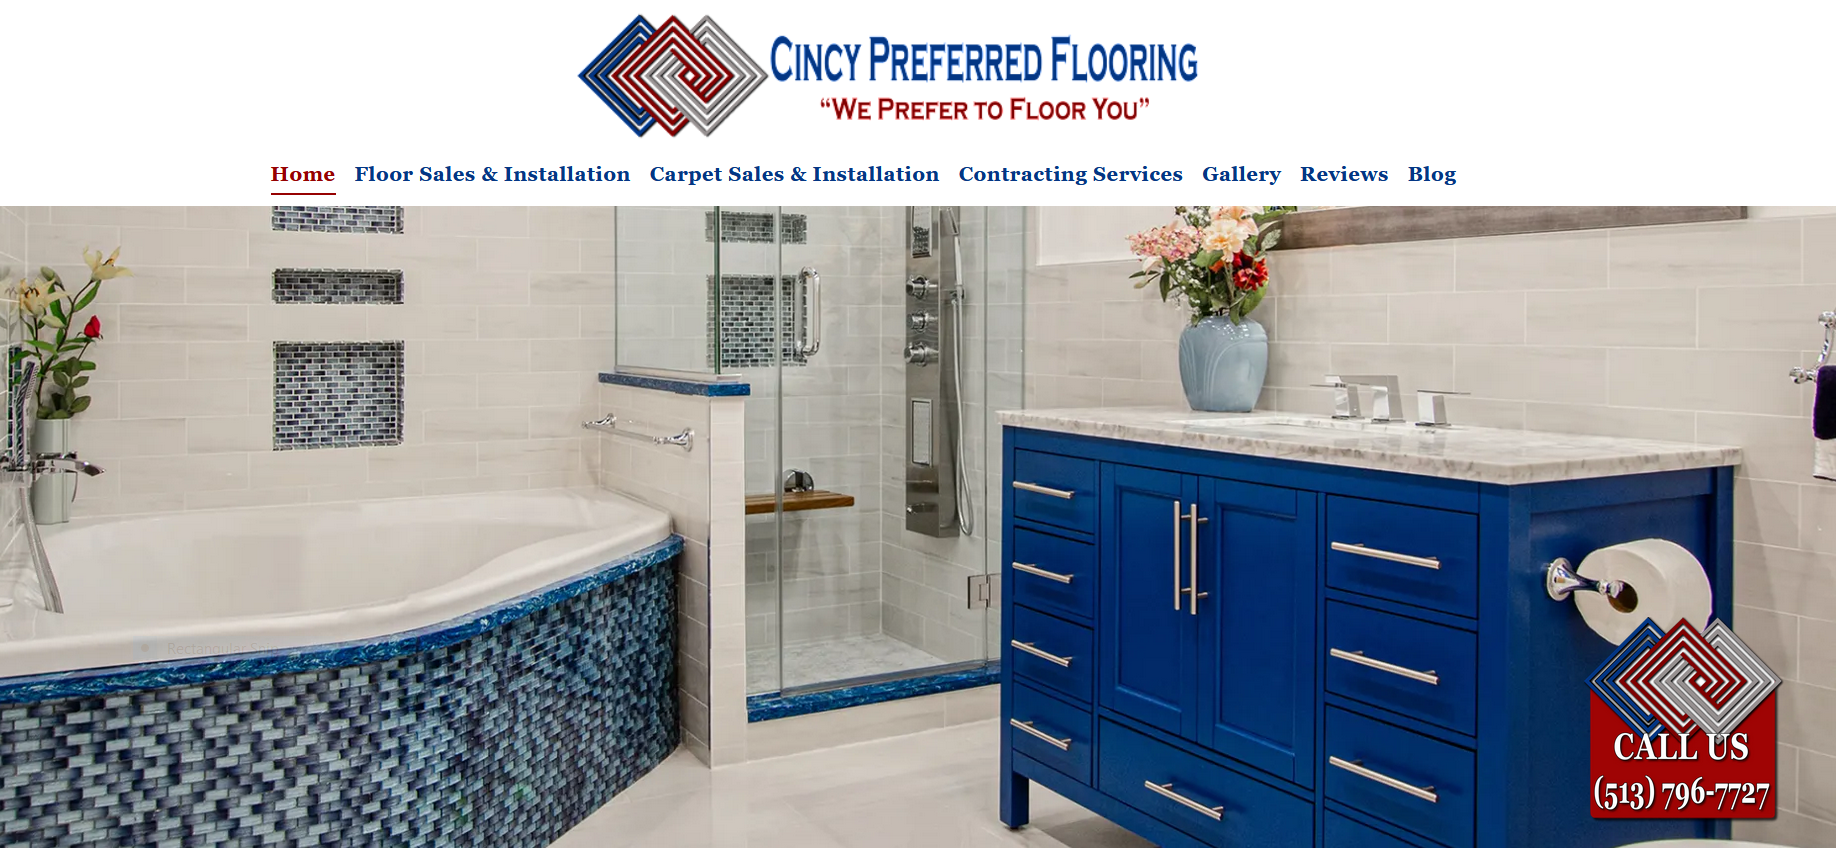 Cincy Preferred Flooring